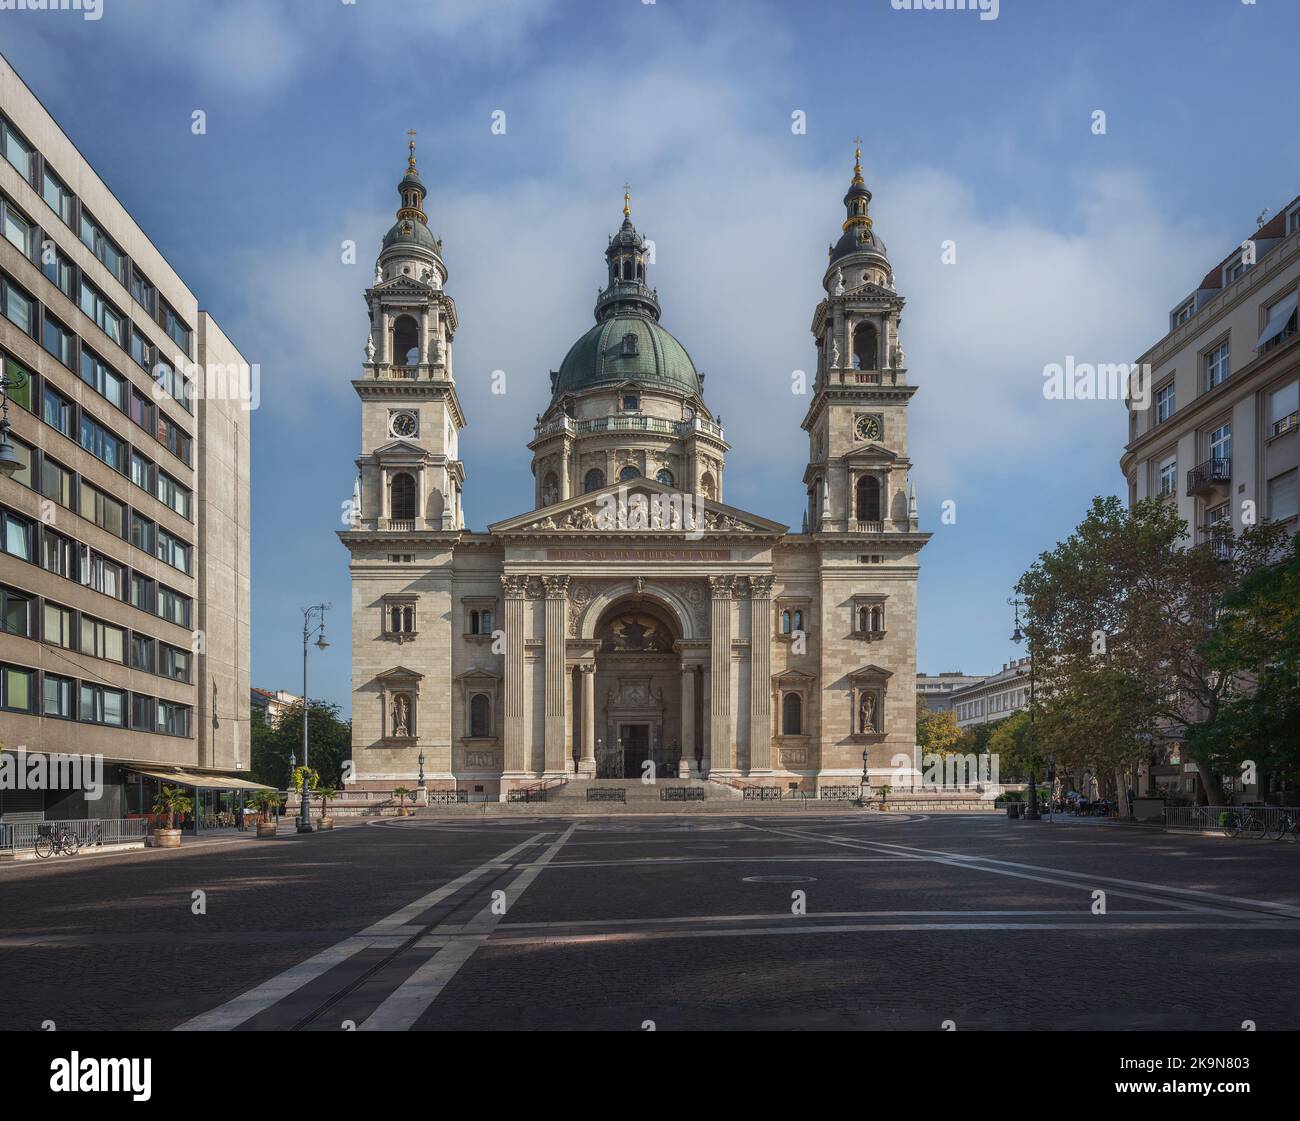 St. Stephens Basilica - Budapest, Hungary Stock Photo